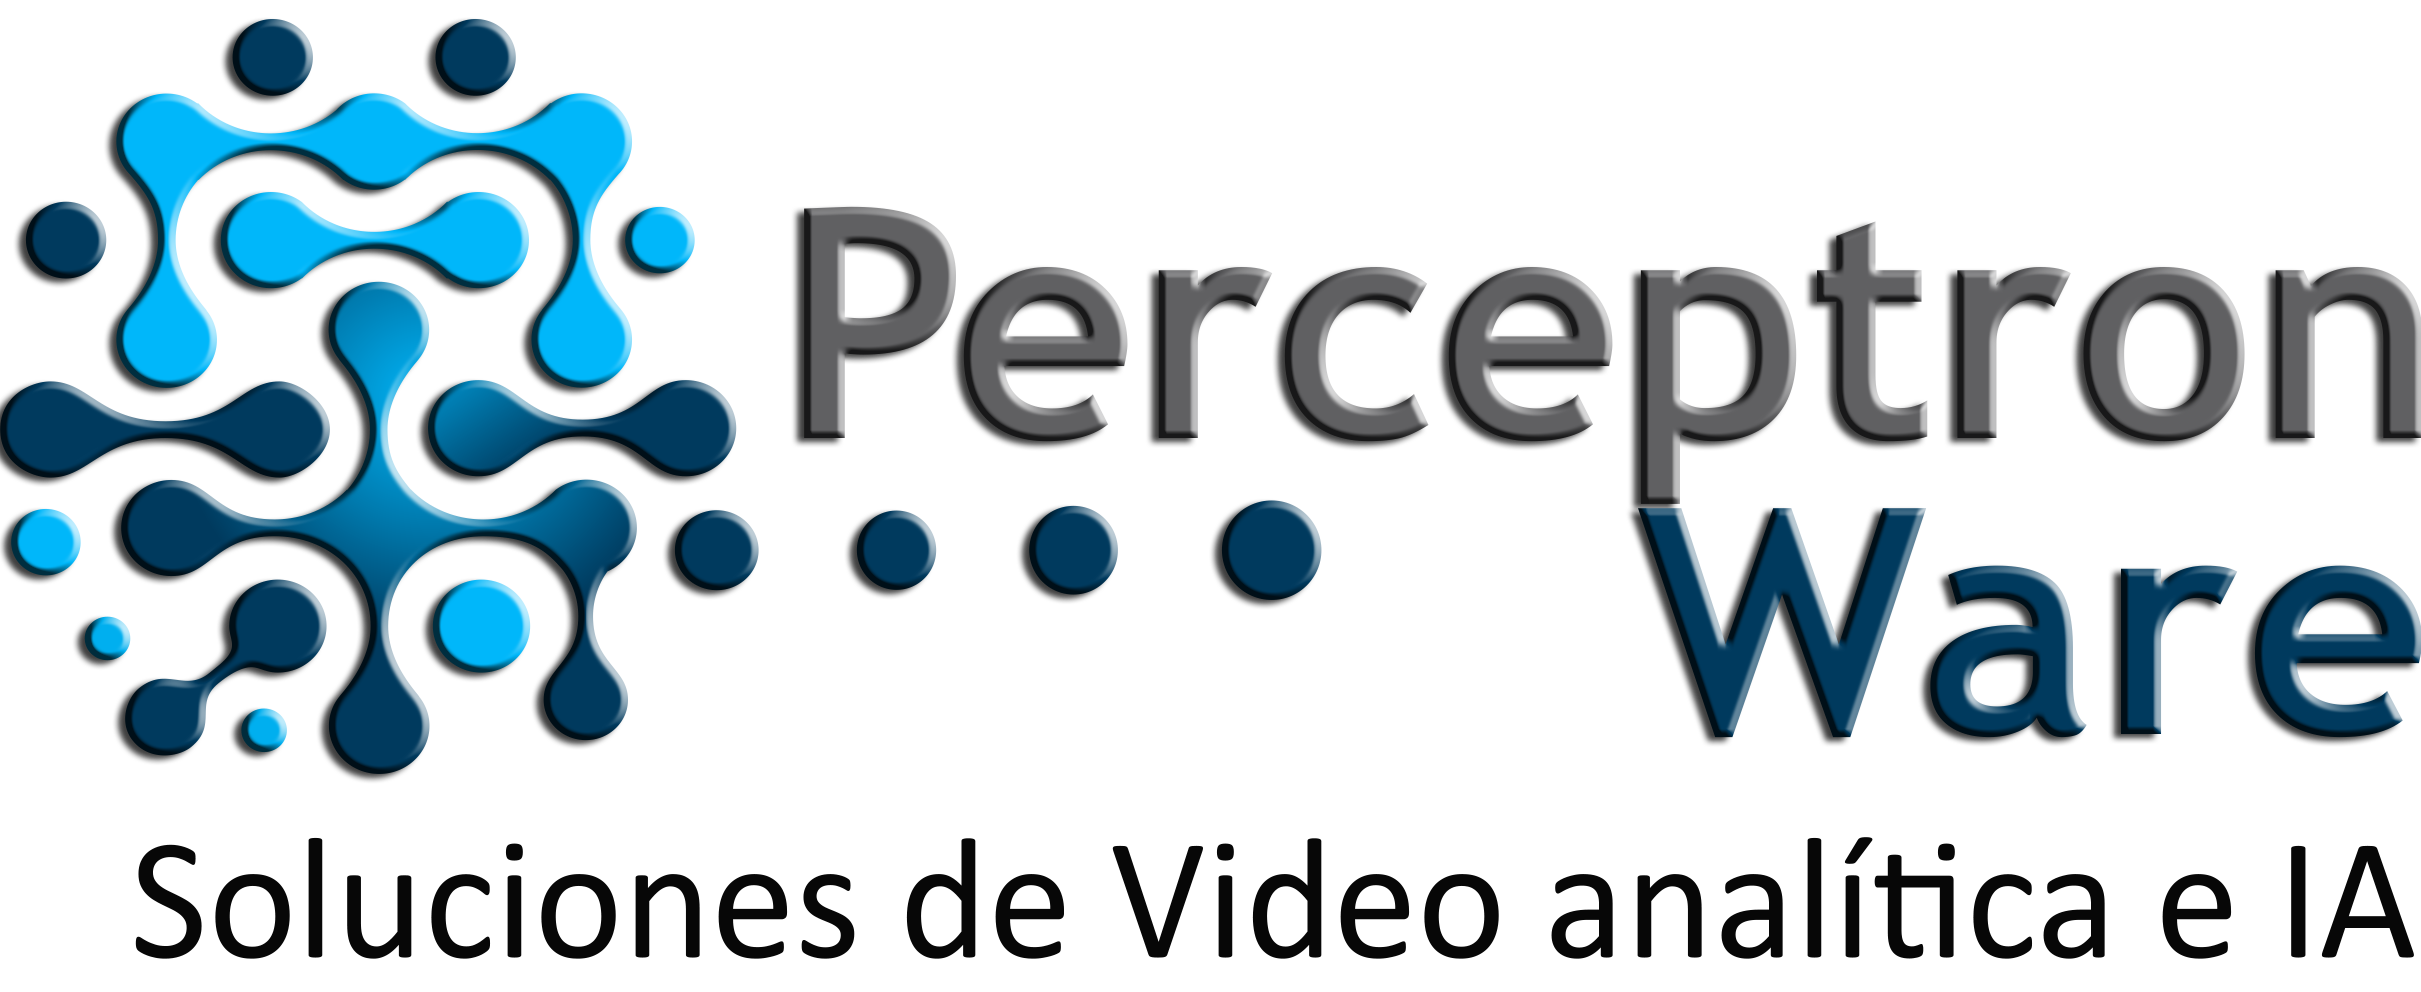 Perceptronware – Soluciones de Videoanalitica